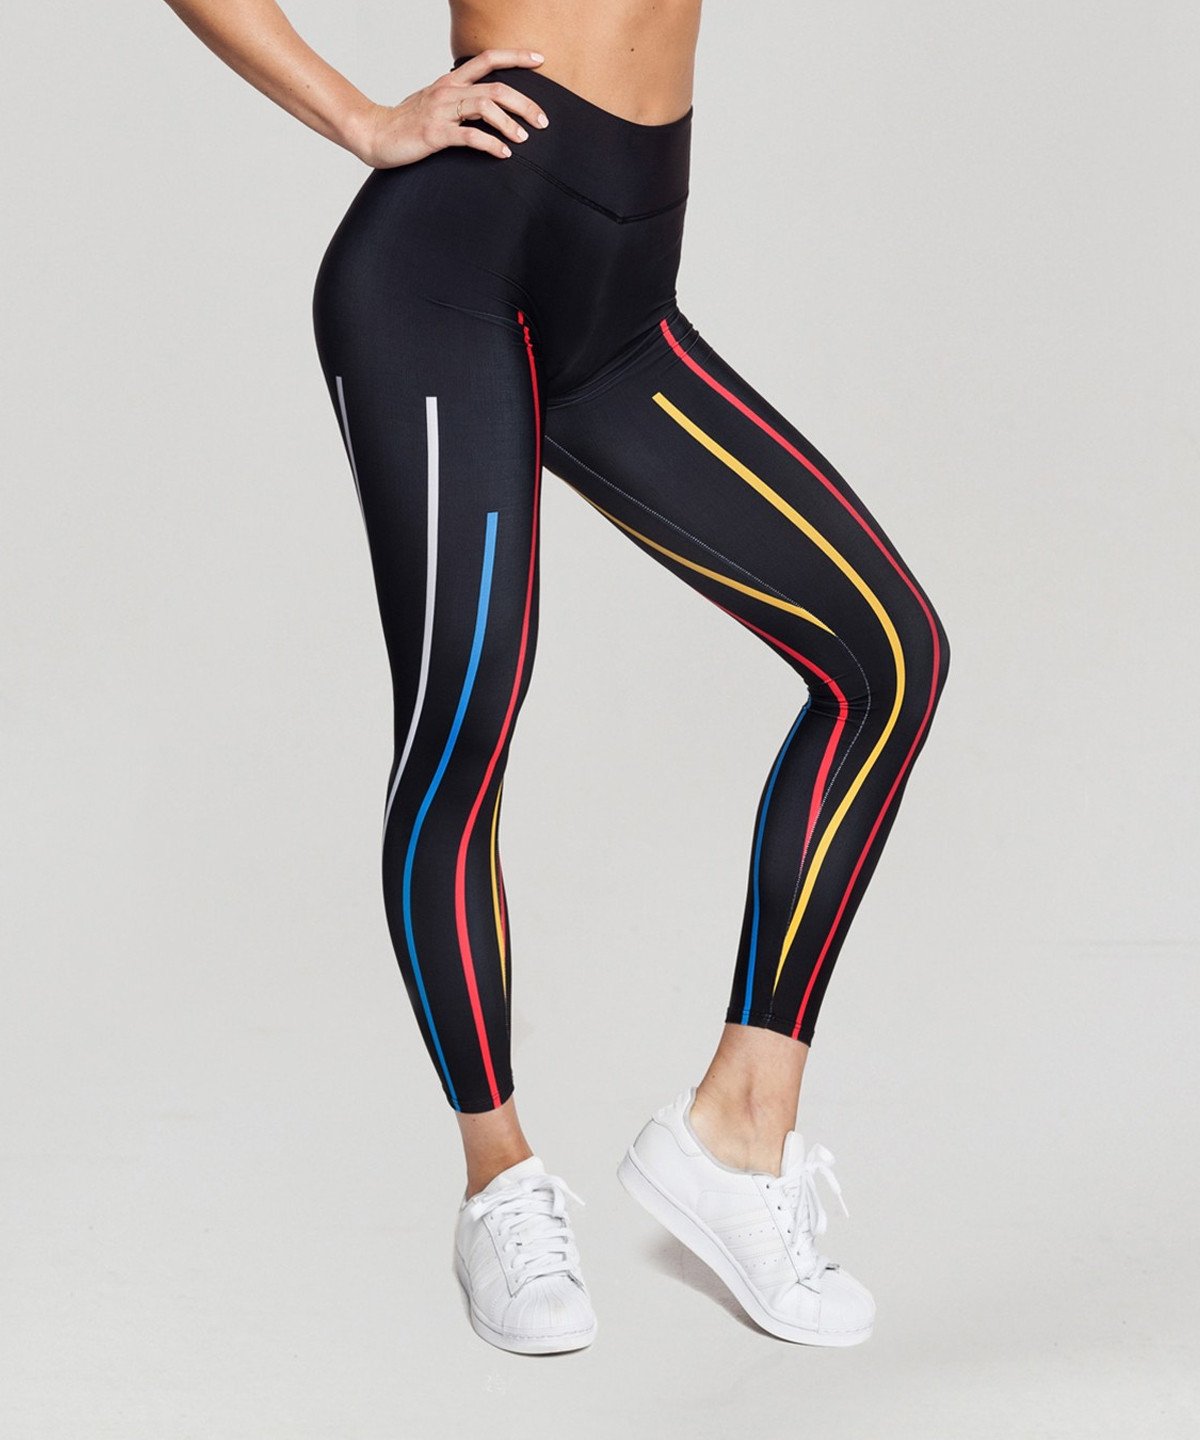 Carpatree Stardust Classic Leggings - black activewear sports leggings with multi coloured stripes print